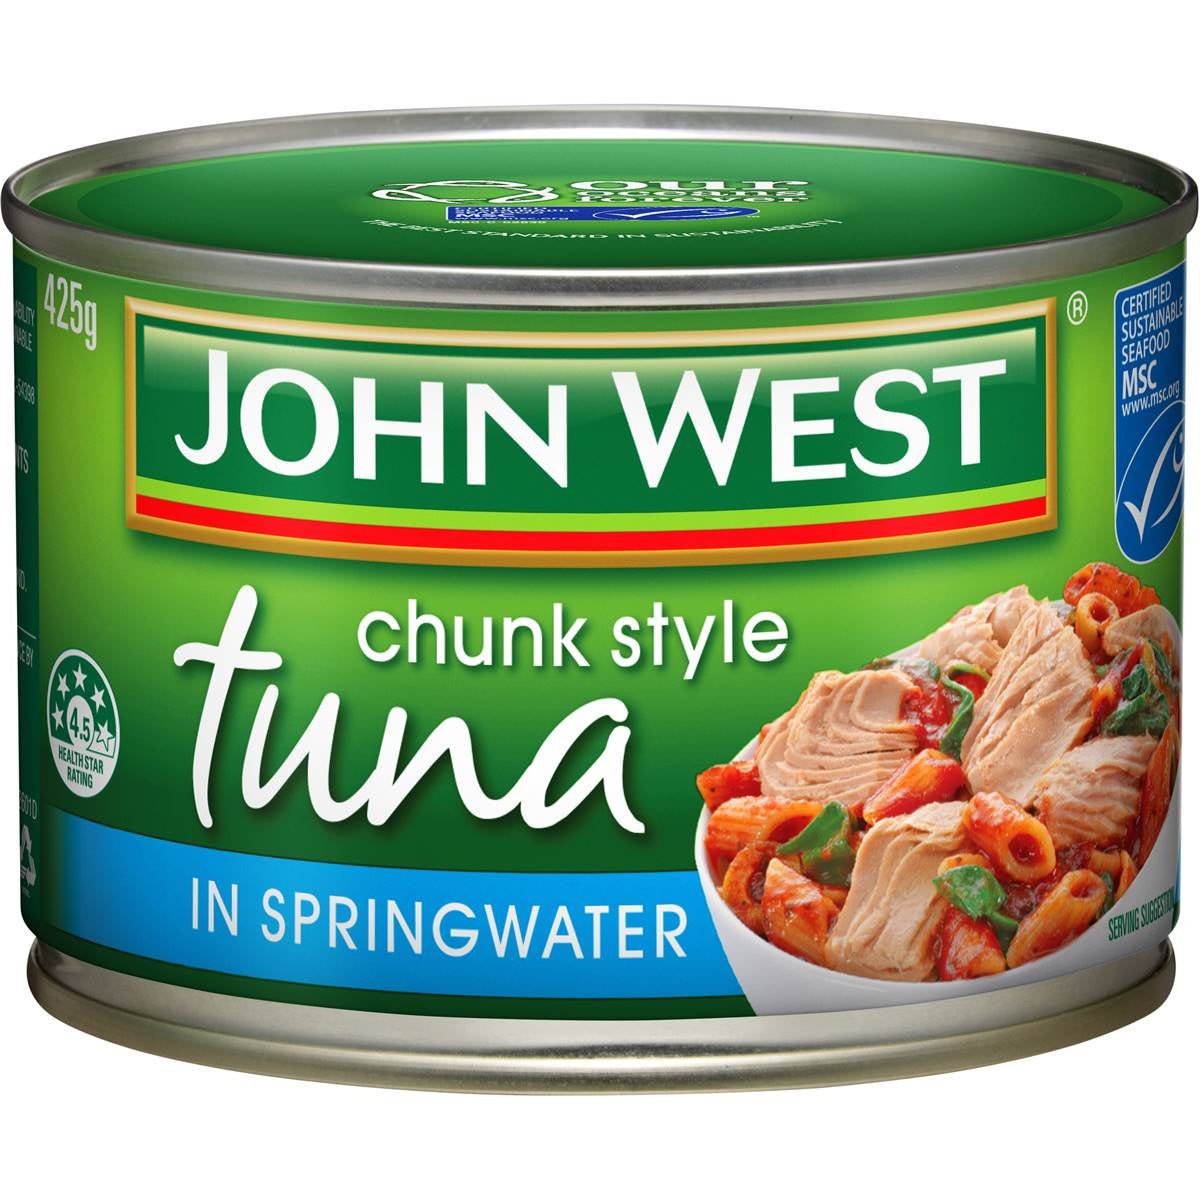 John West Tuna in Springwater 425g